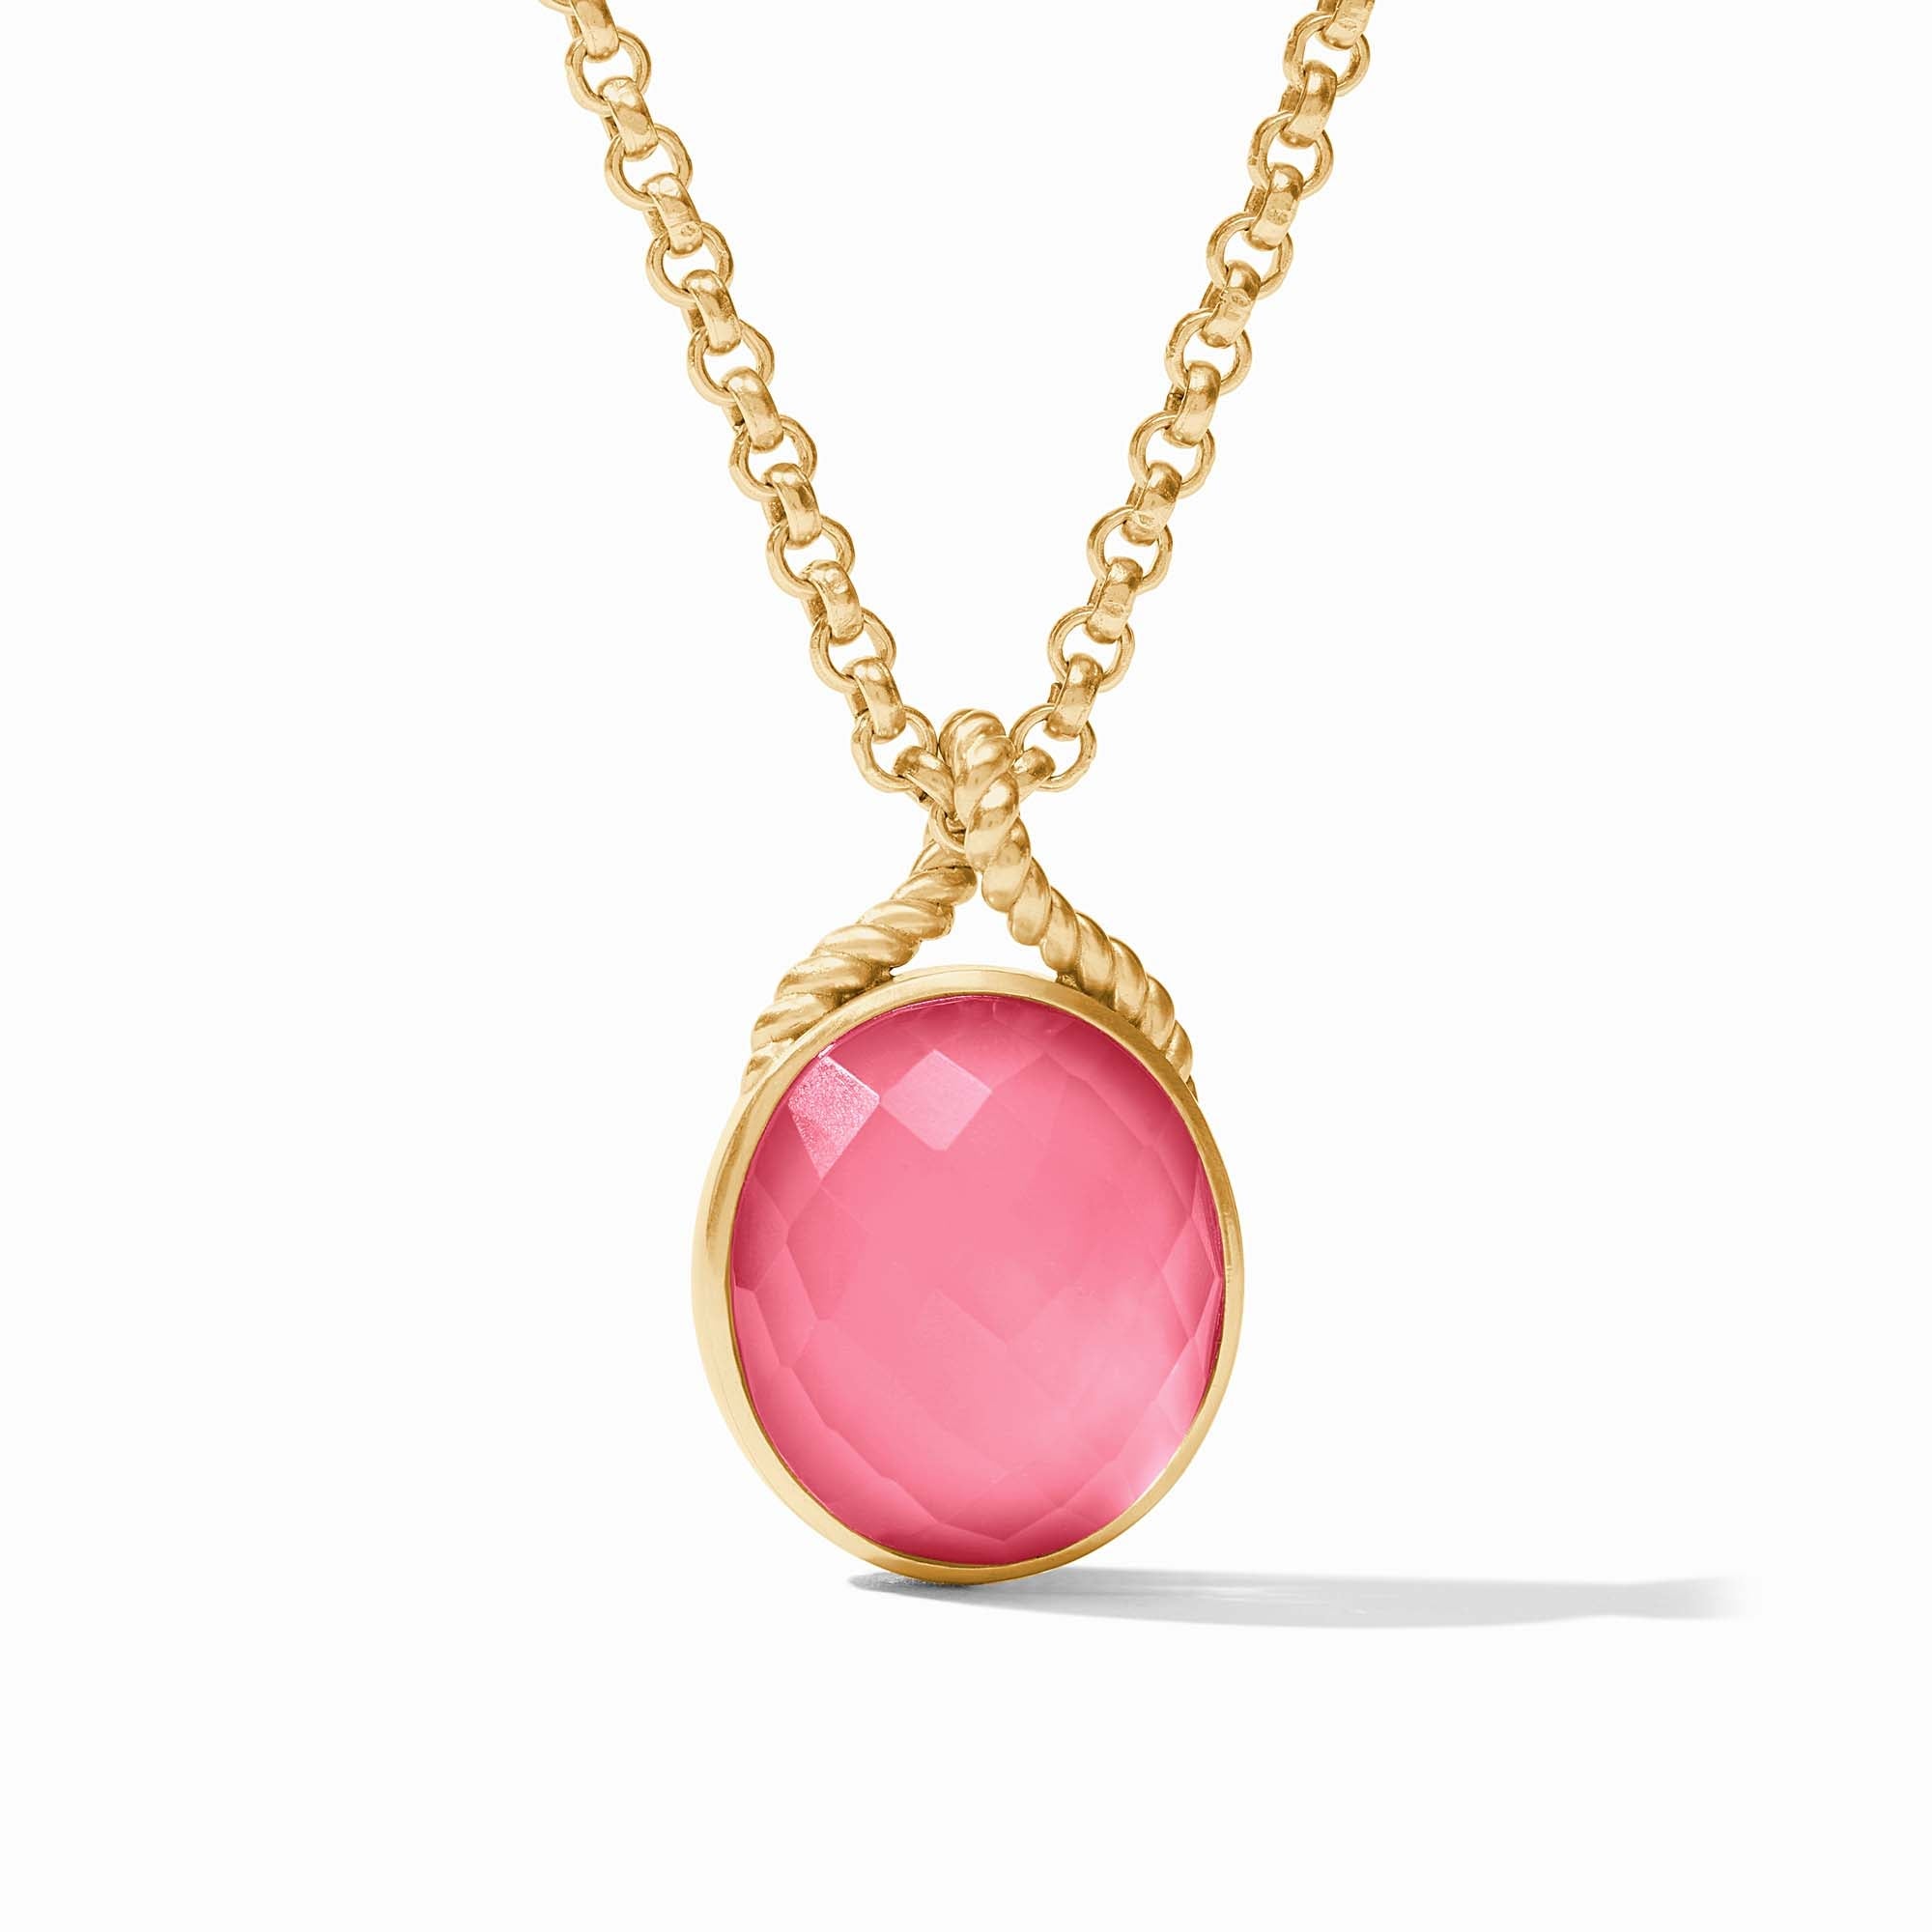 Julie Vos - Nassau Stone Pendant, Iridescent Peony Pink